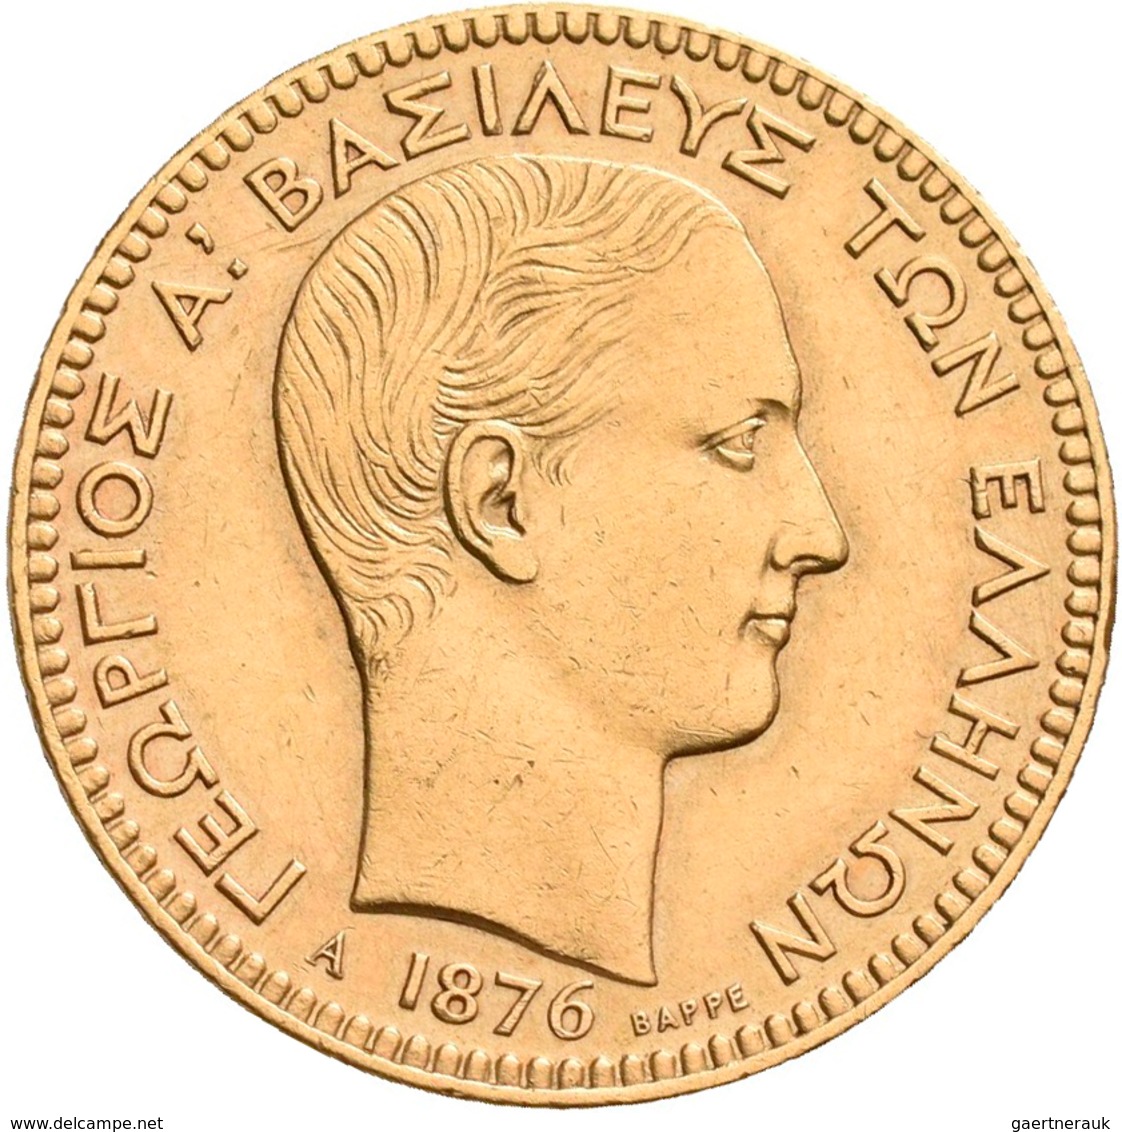 Griechenland - Anlagegold: George I. 1863-1913: 20 Drachmen 1876 A, KM# 49, Friedberg 15. 6,42 G, 90 - Griechenland